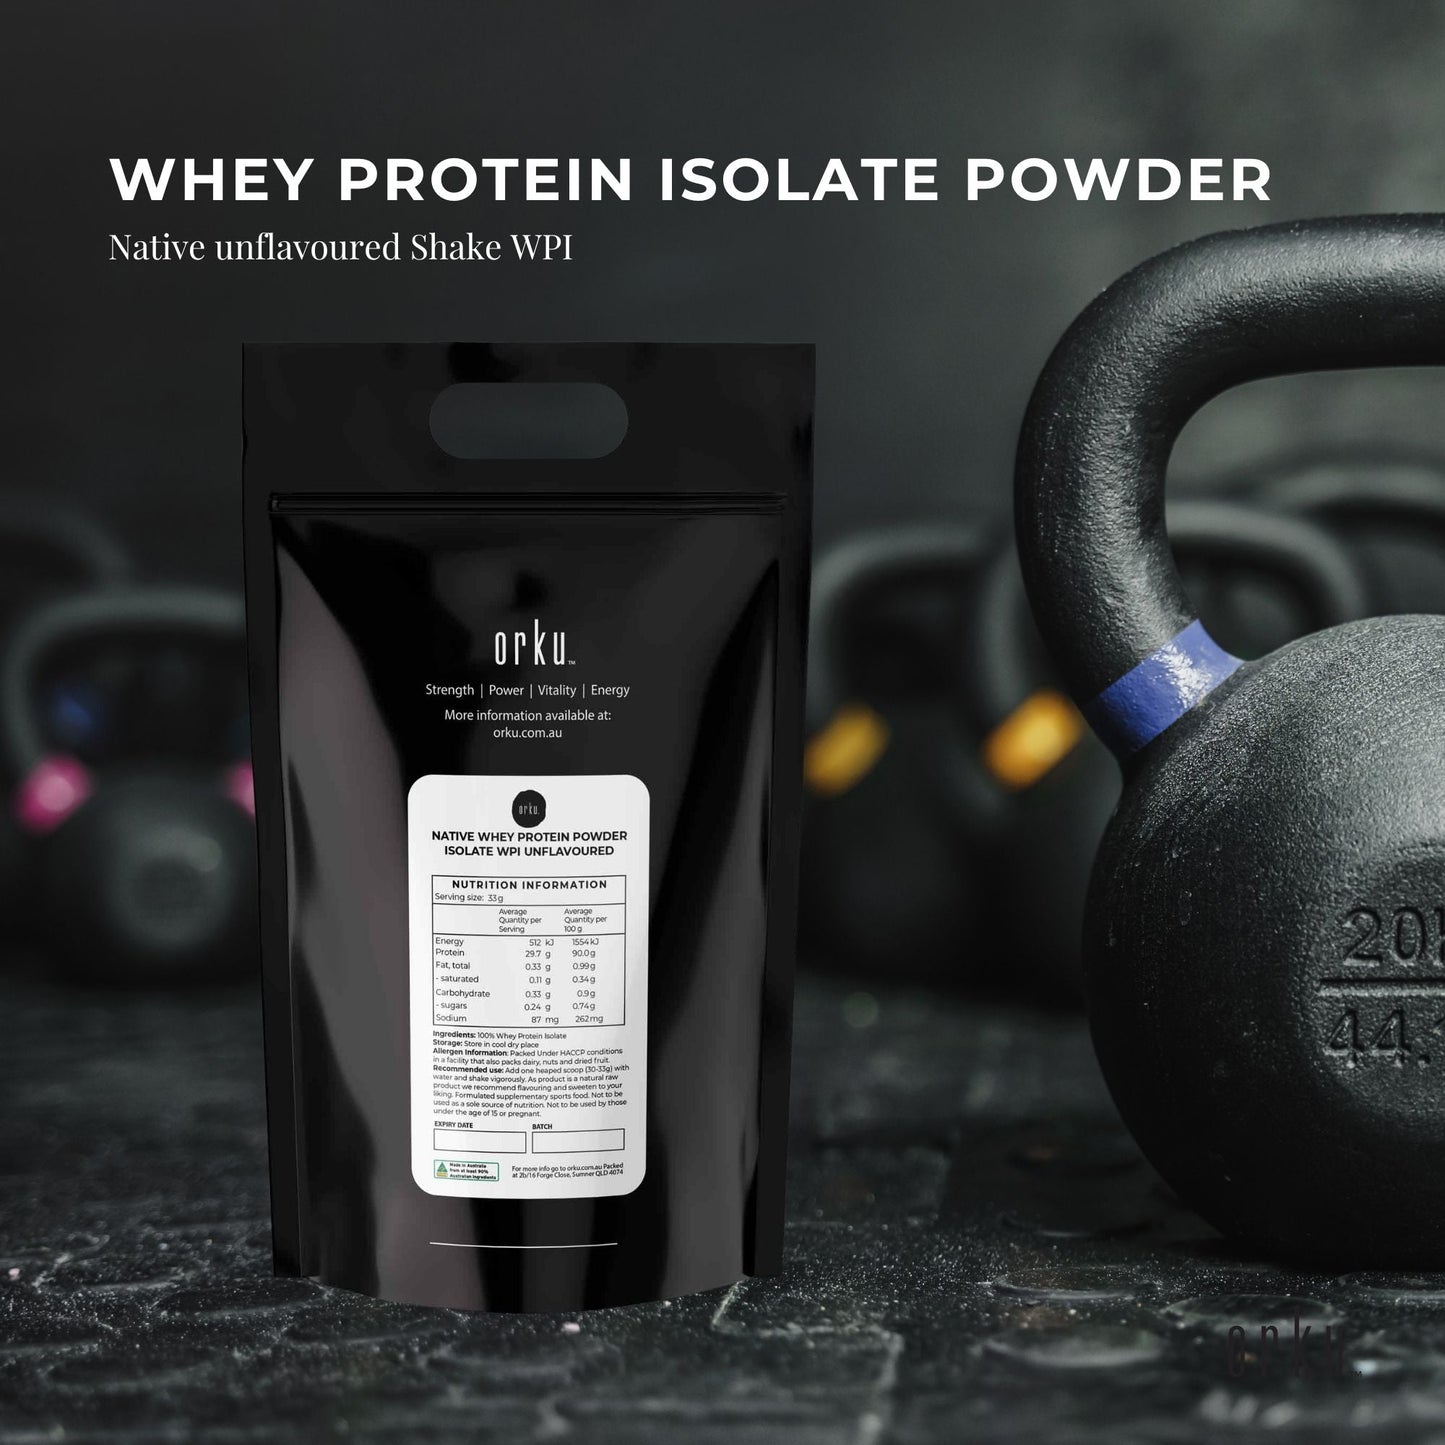 Native Unflavoured Whey Protein Isolate Powder - Shake WPI Supplement